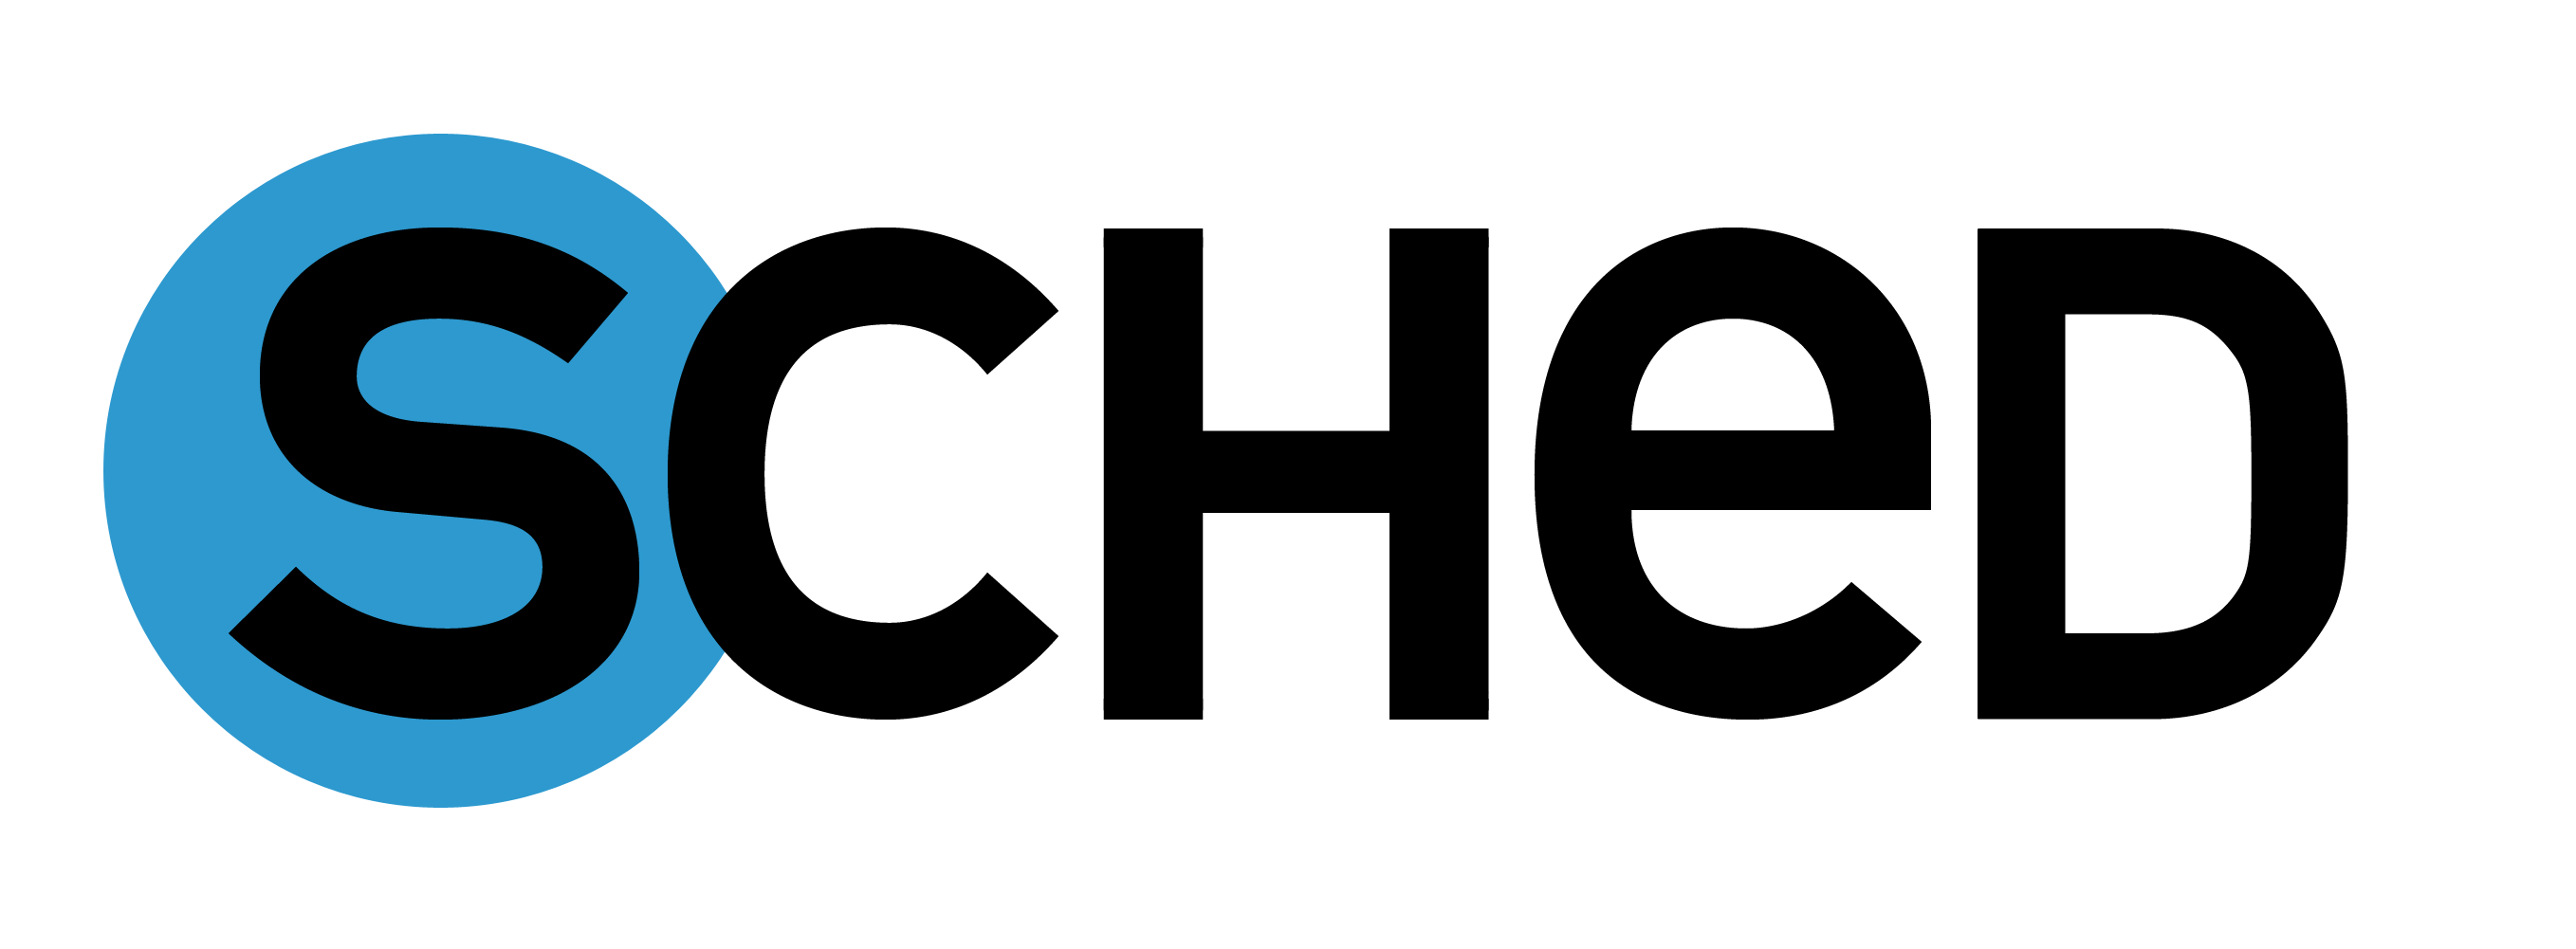 Sched Logo - Eventbrite Spectrum: Conference Planner Picks